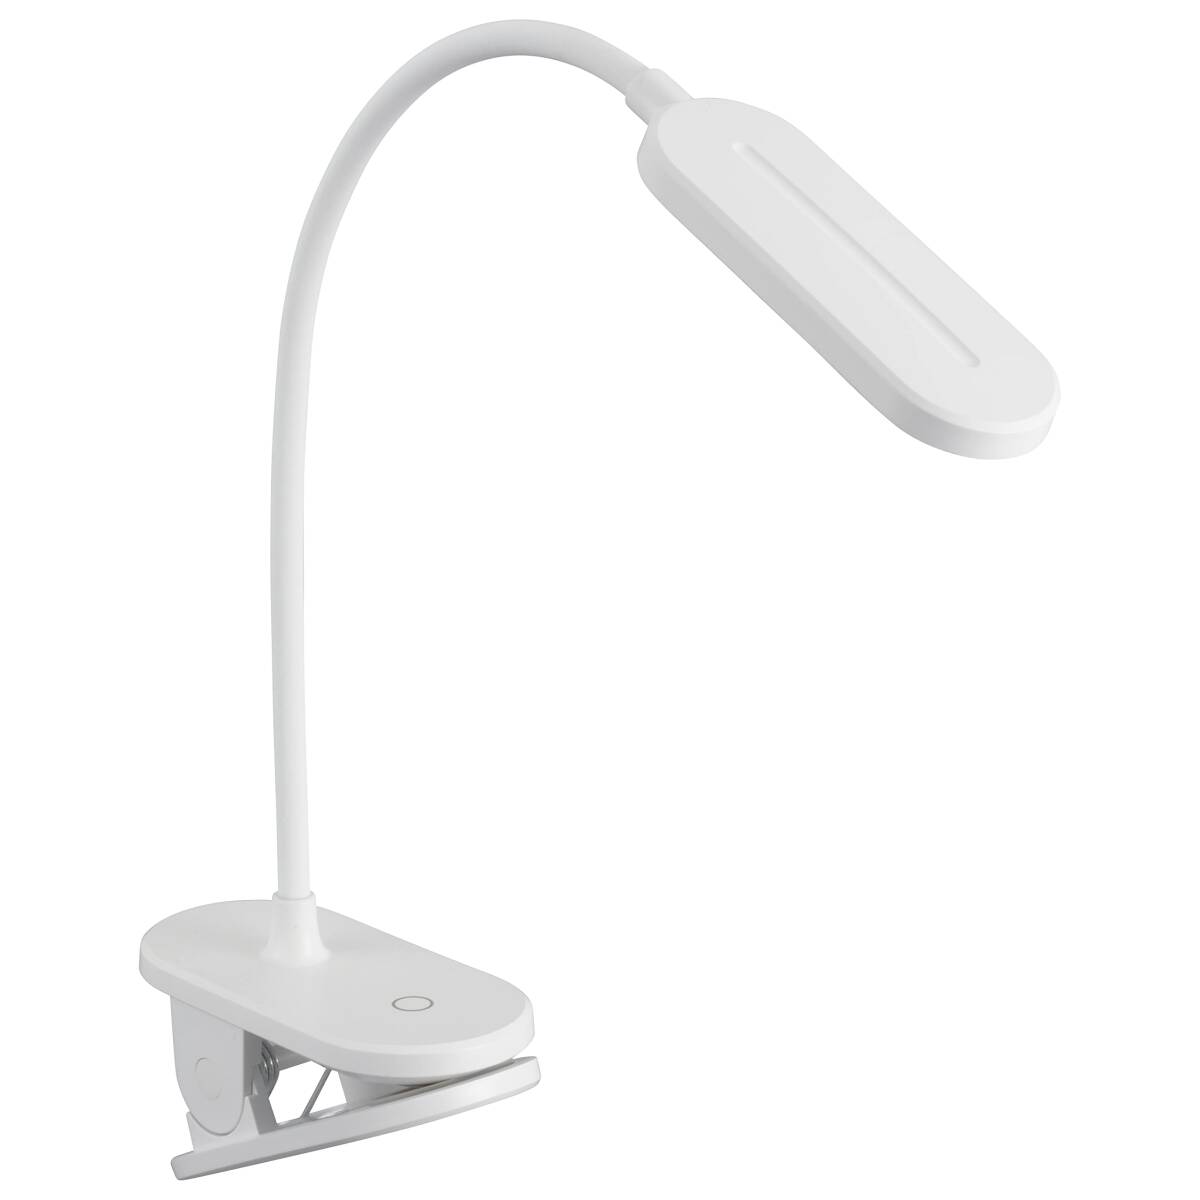  ohm (OHM) electro- machine LED clip light lamp color white LTC-LC12U-WL 06-0988